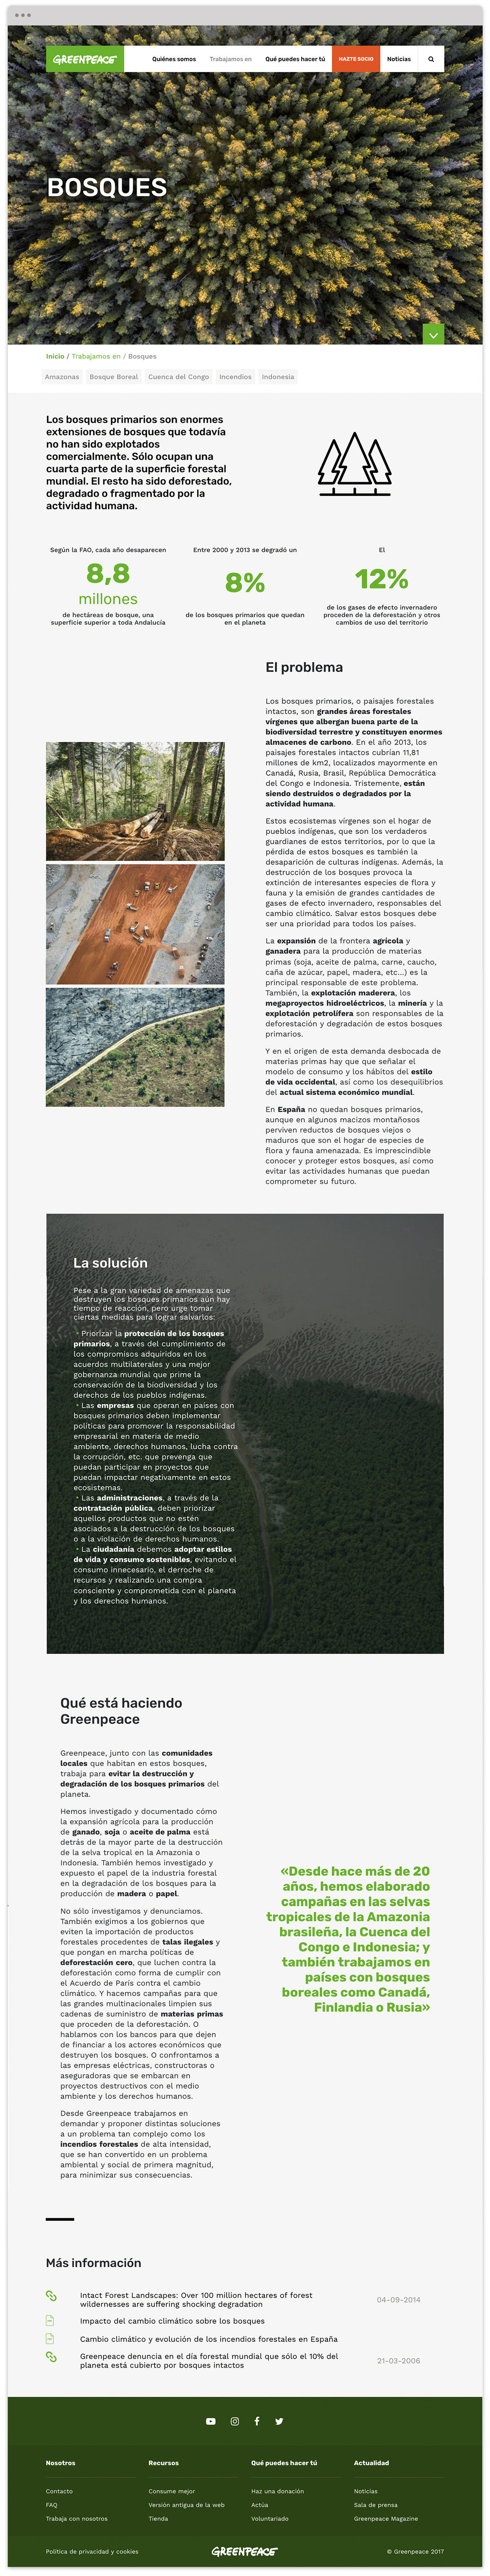 Web de Greenpeace España Screenshot 3